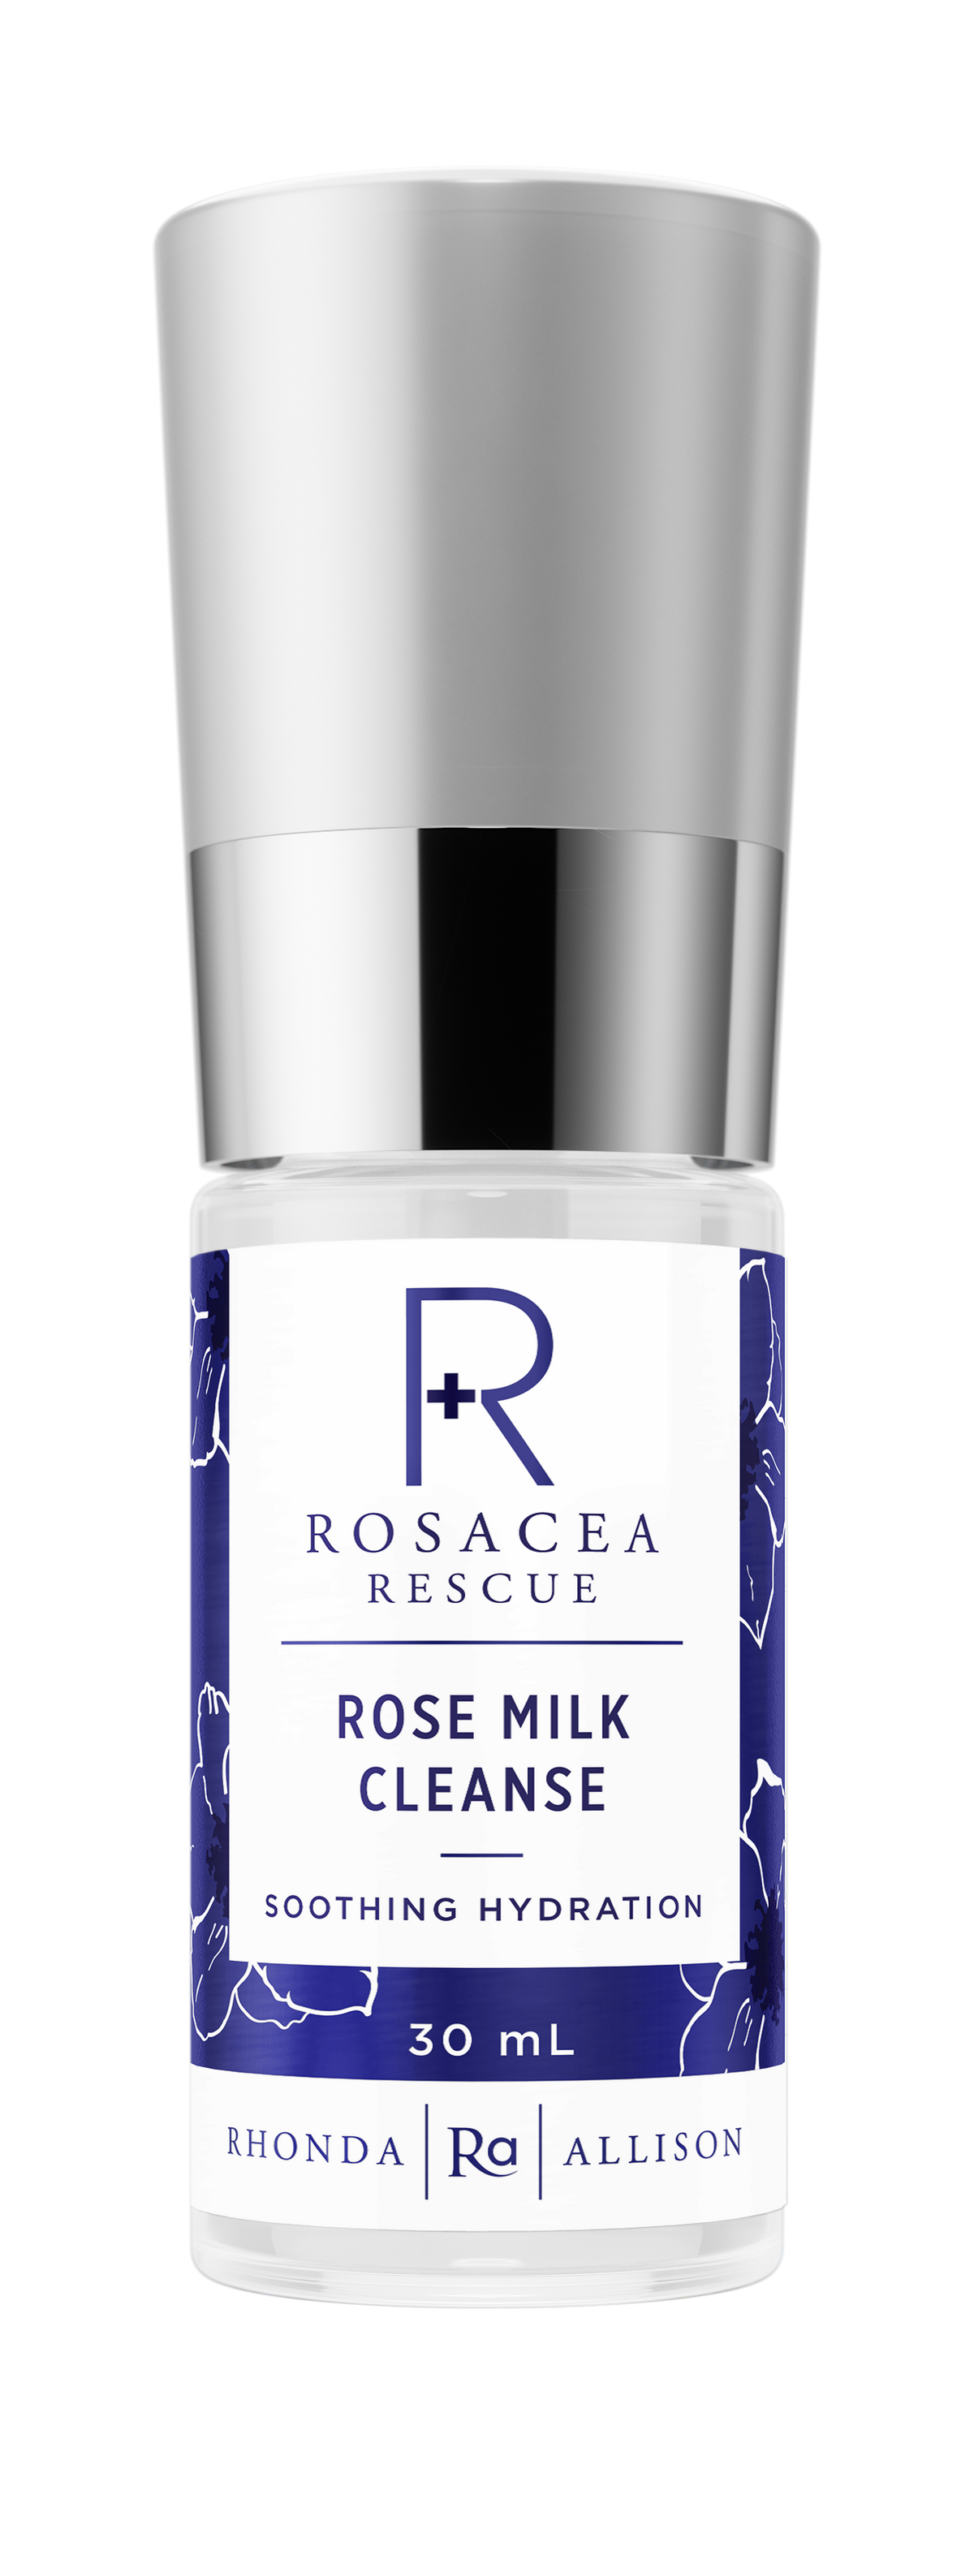 Rose Milk Cleanse - 15% off